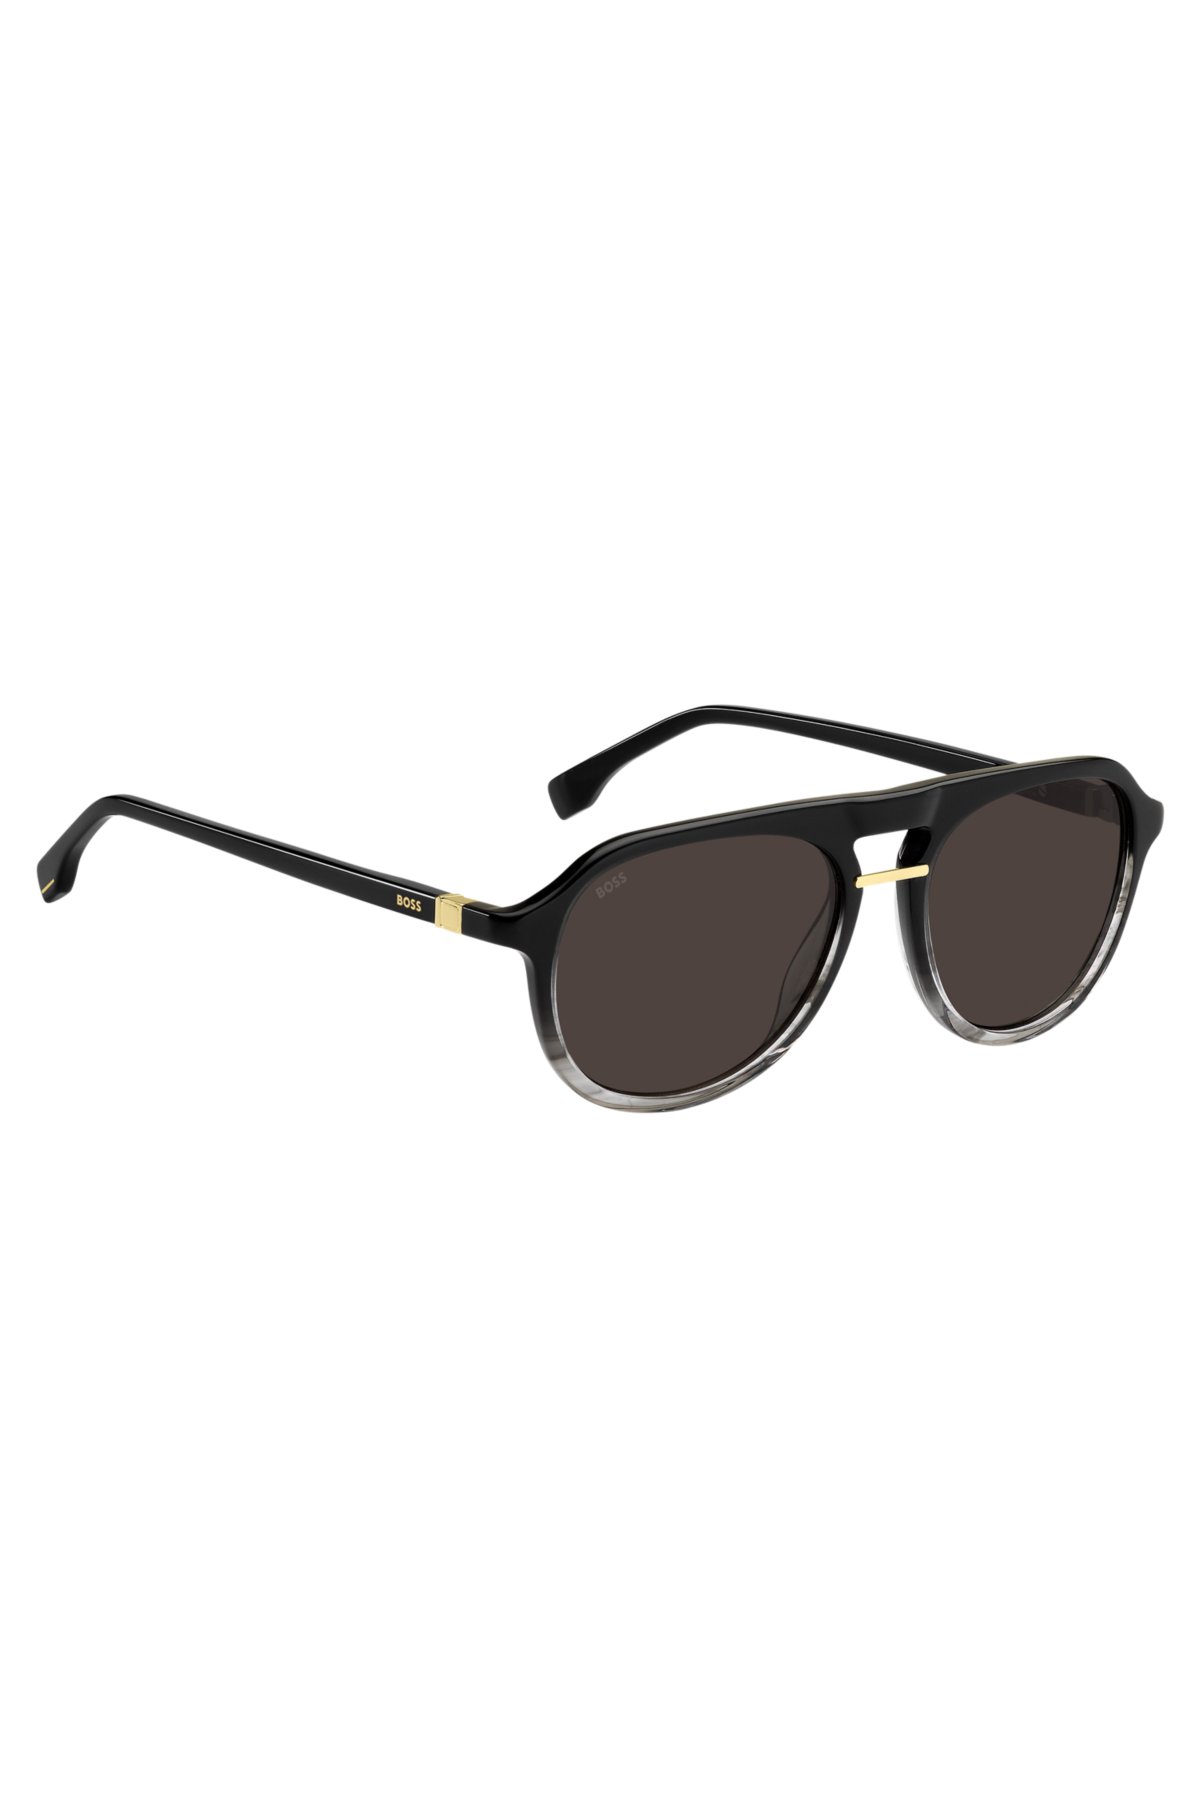 BOSS - Black-acetate sunglasses with gold-tone trims